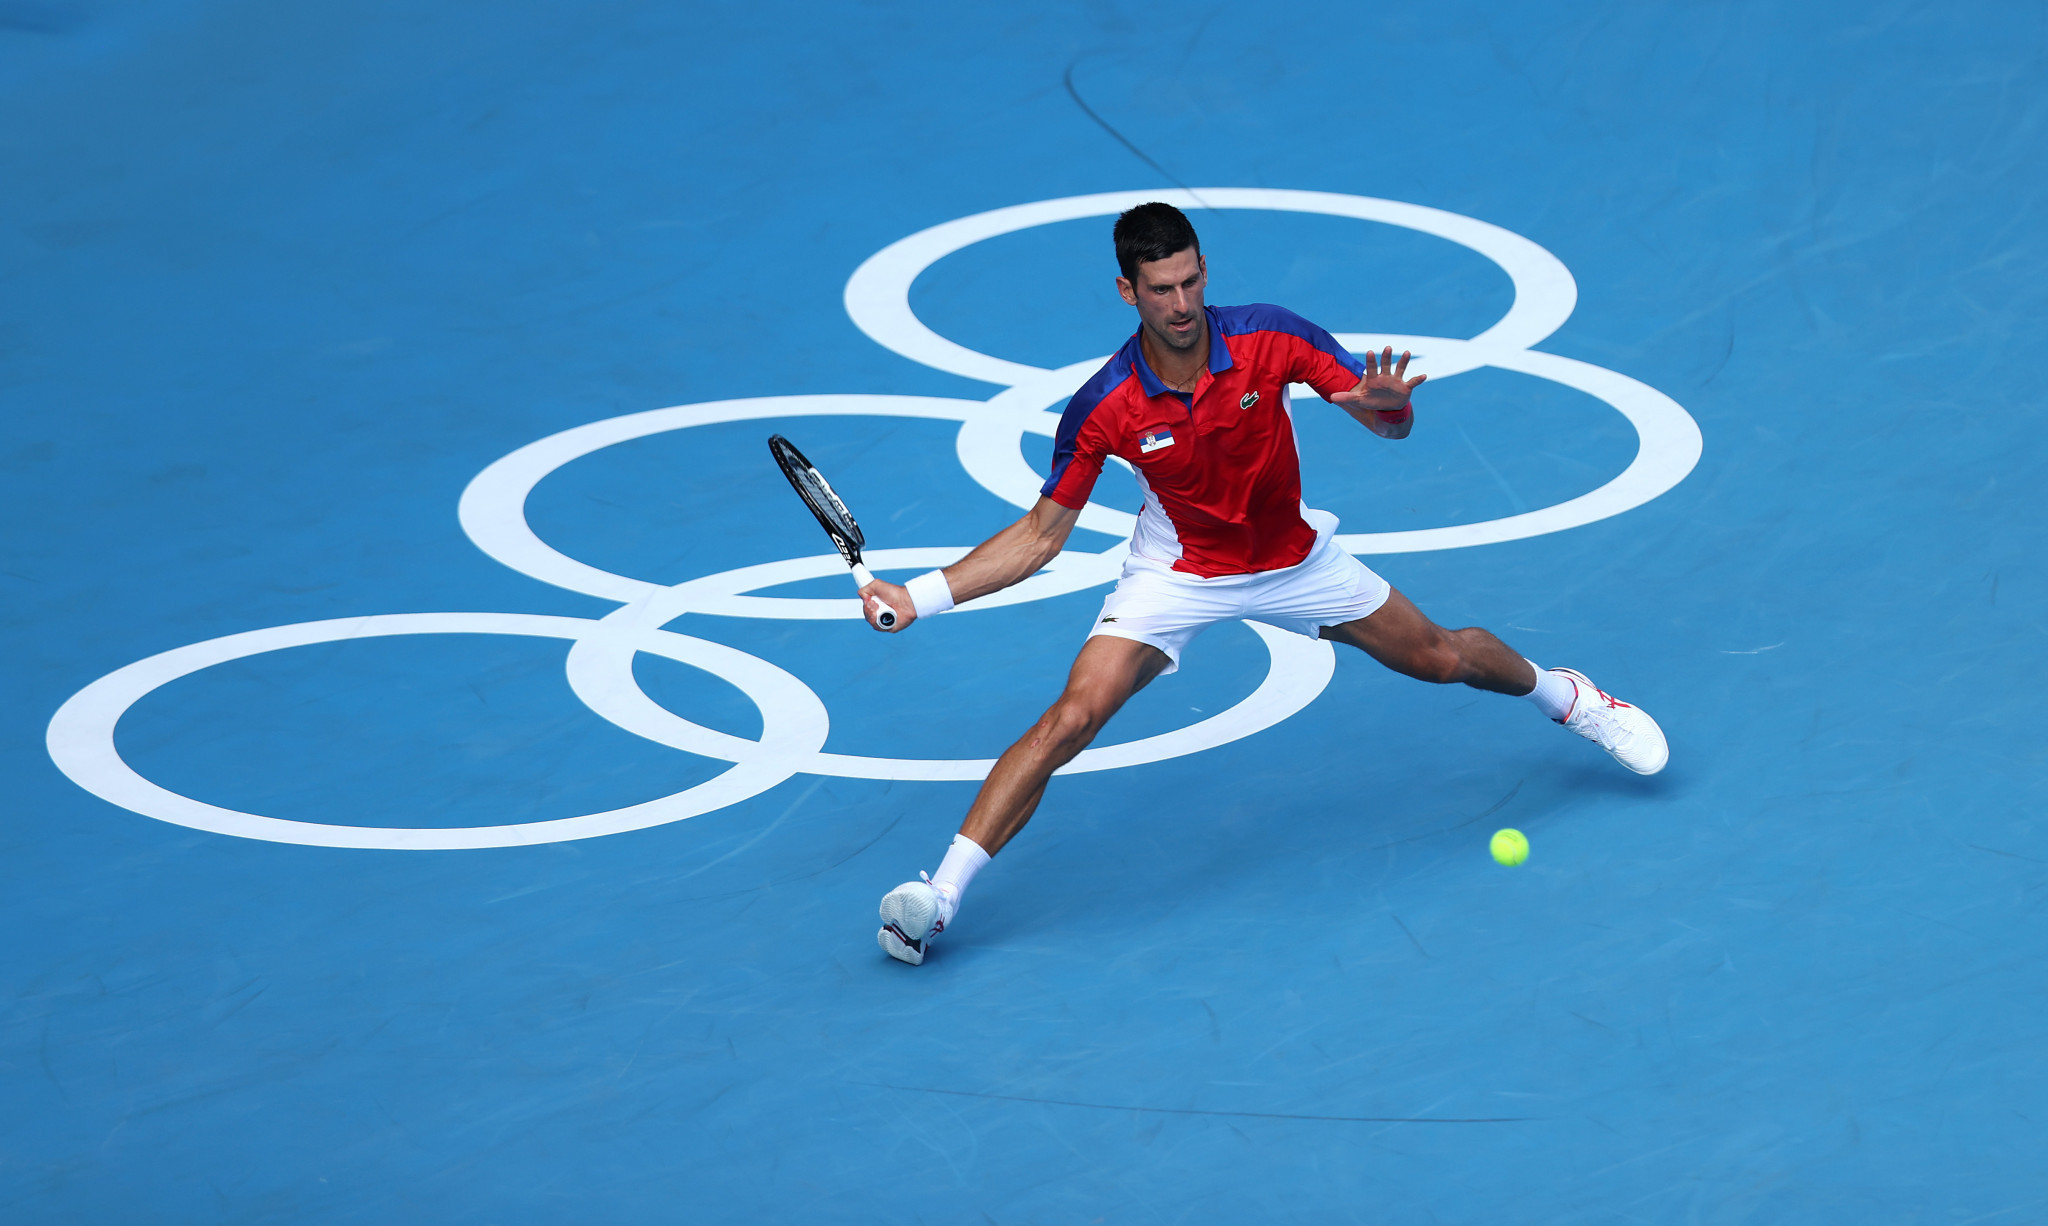 Djokovic's coach hints at Los Angeles 2028 Olympics plan